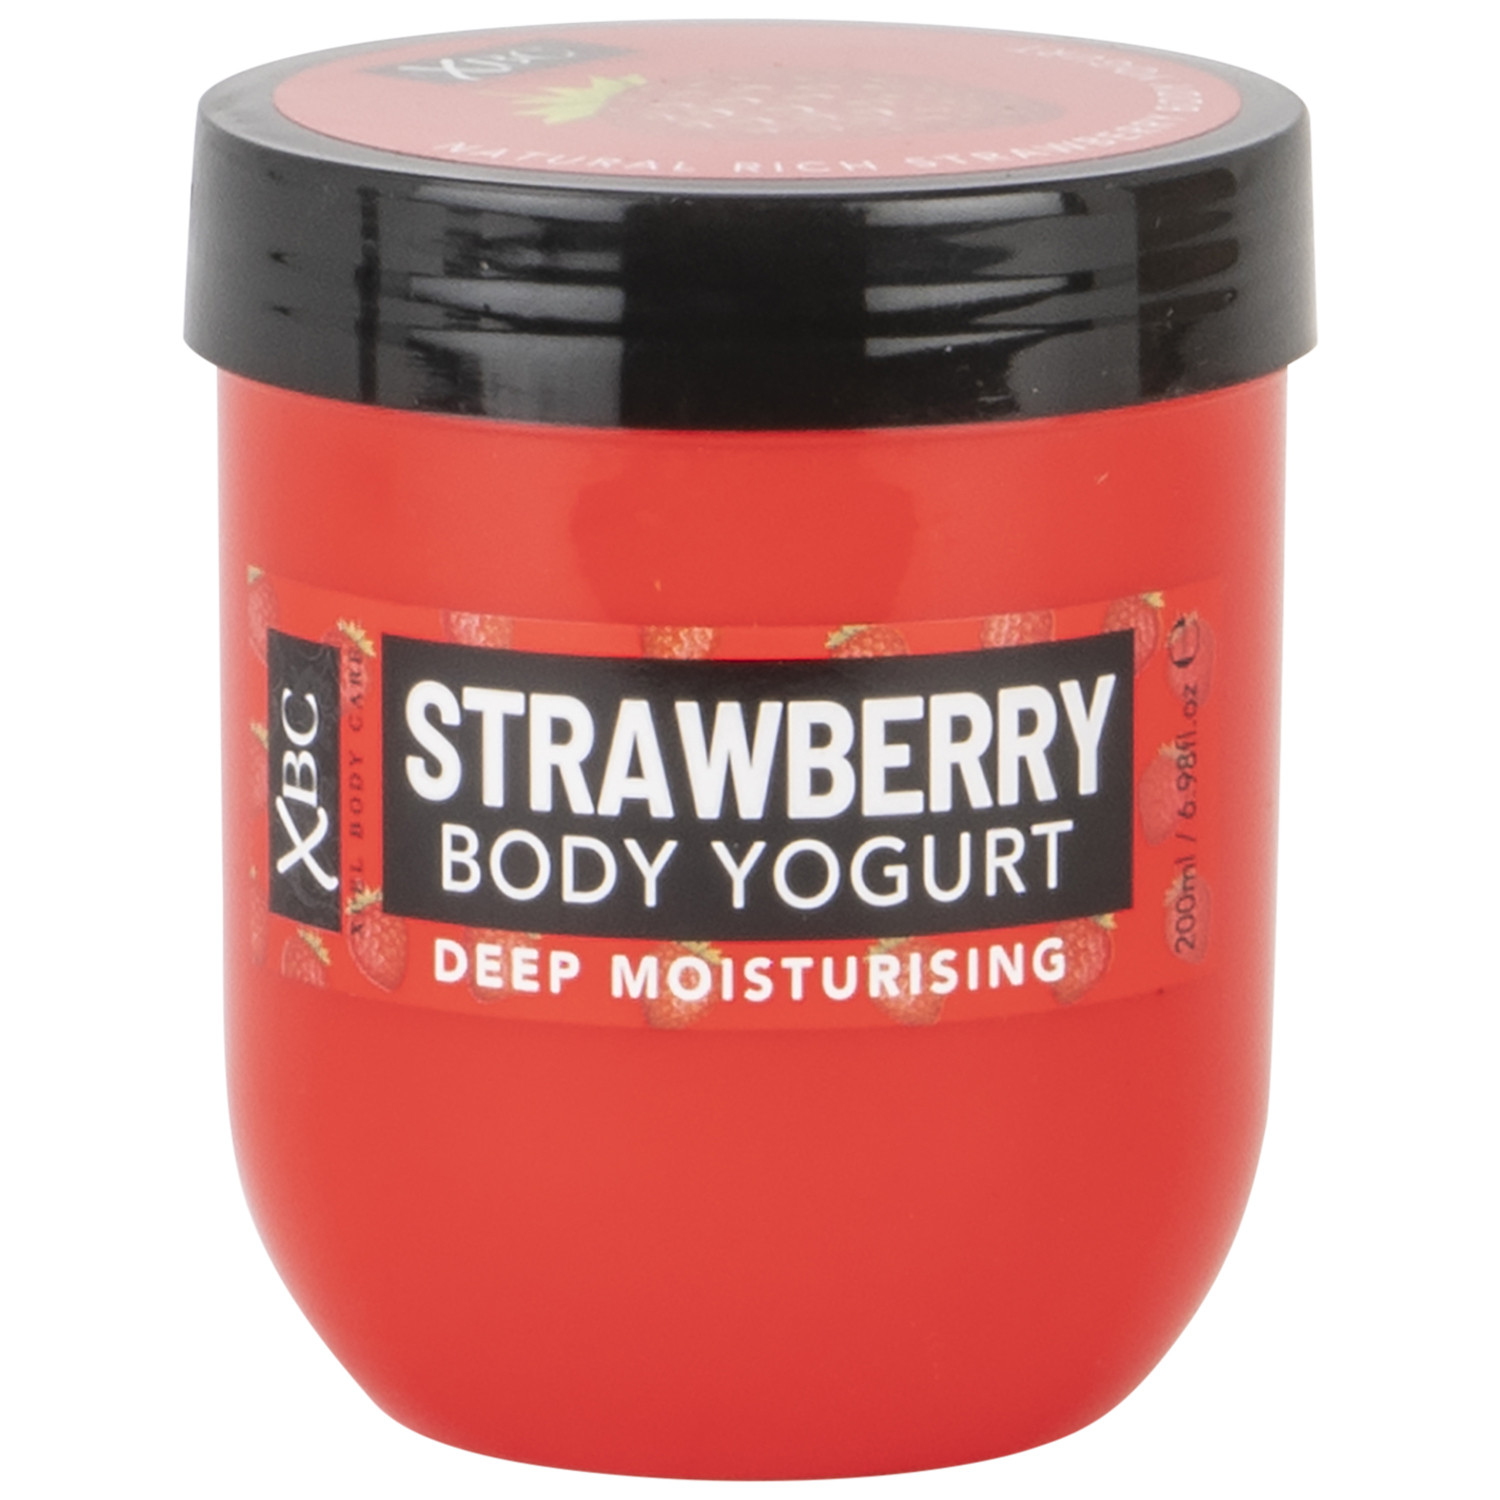 Body Yogurt - Strawberry Image